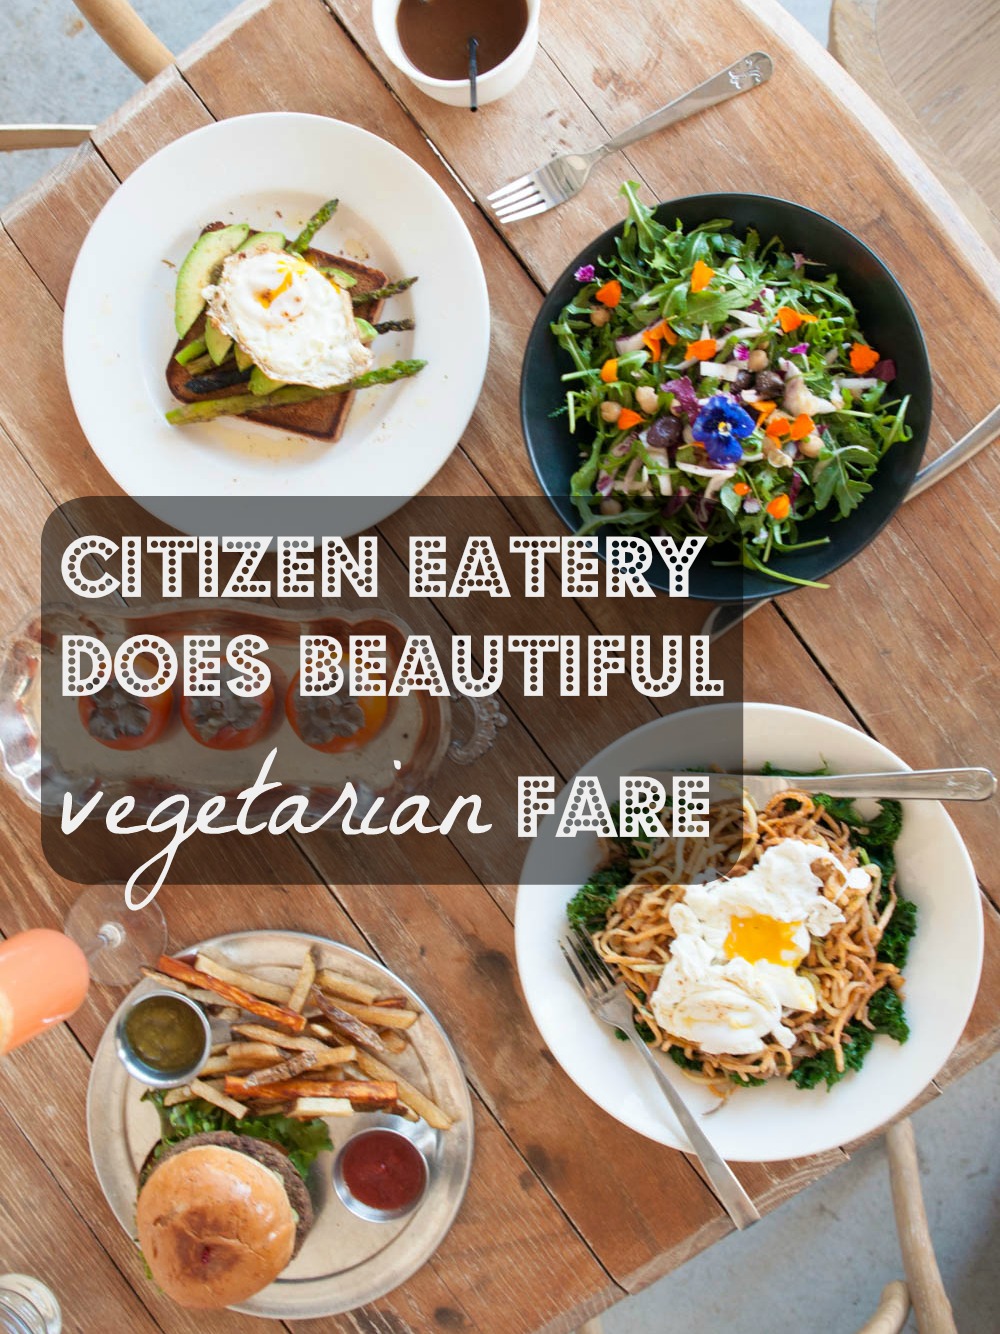 Citizen Eatery in Austin